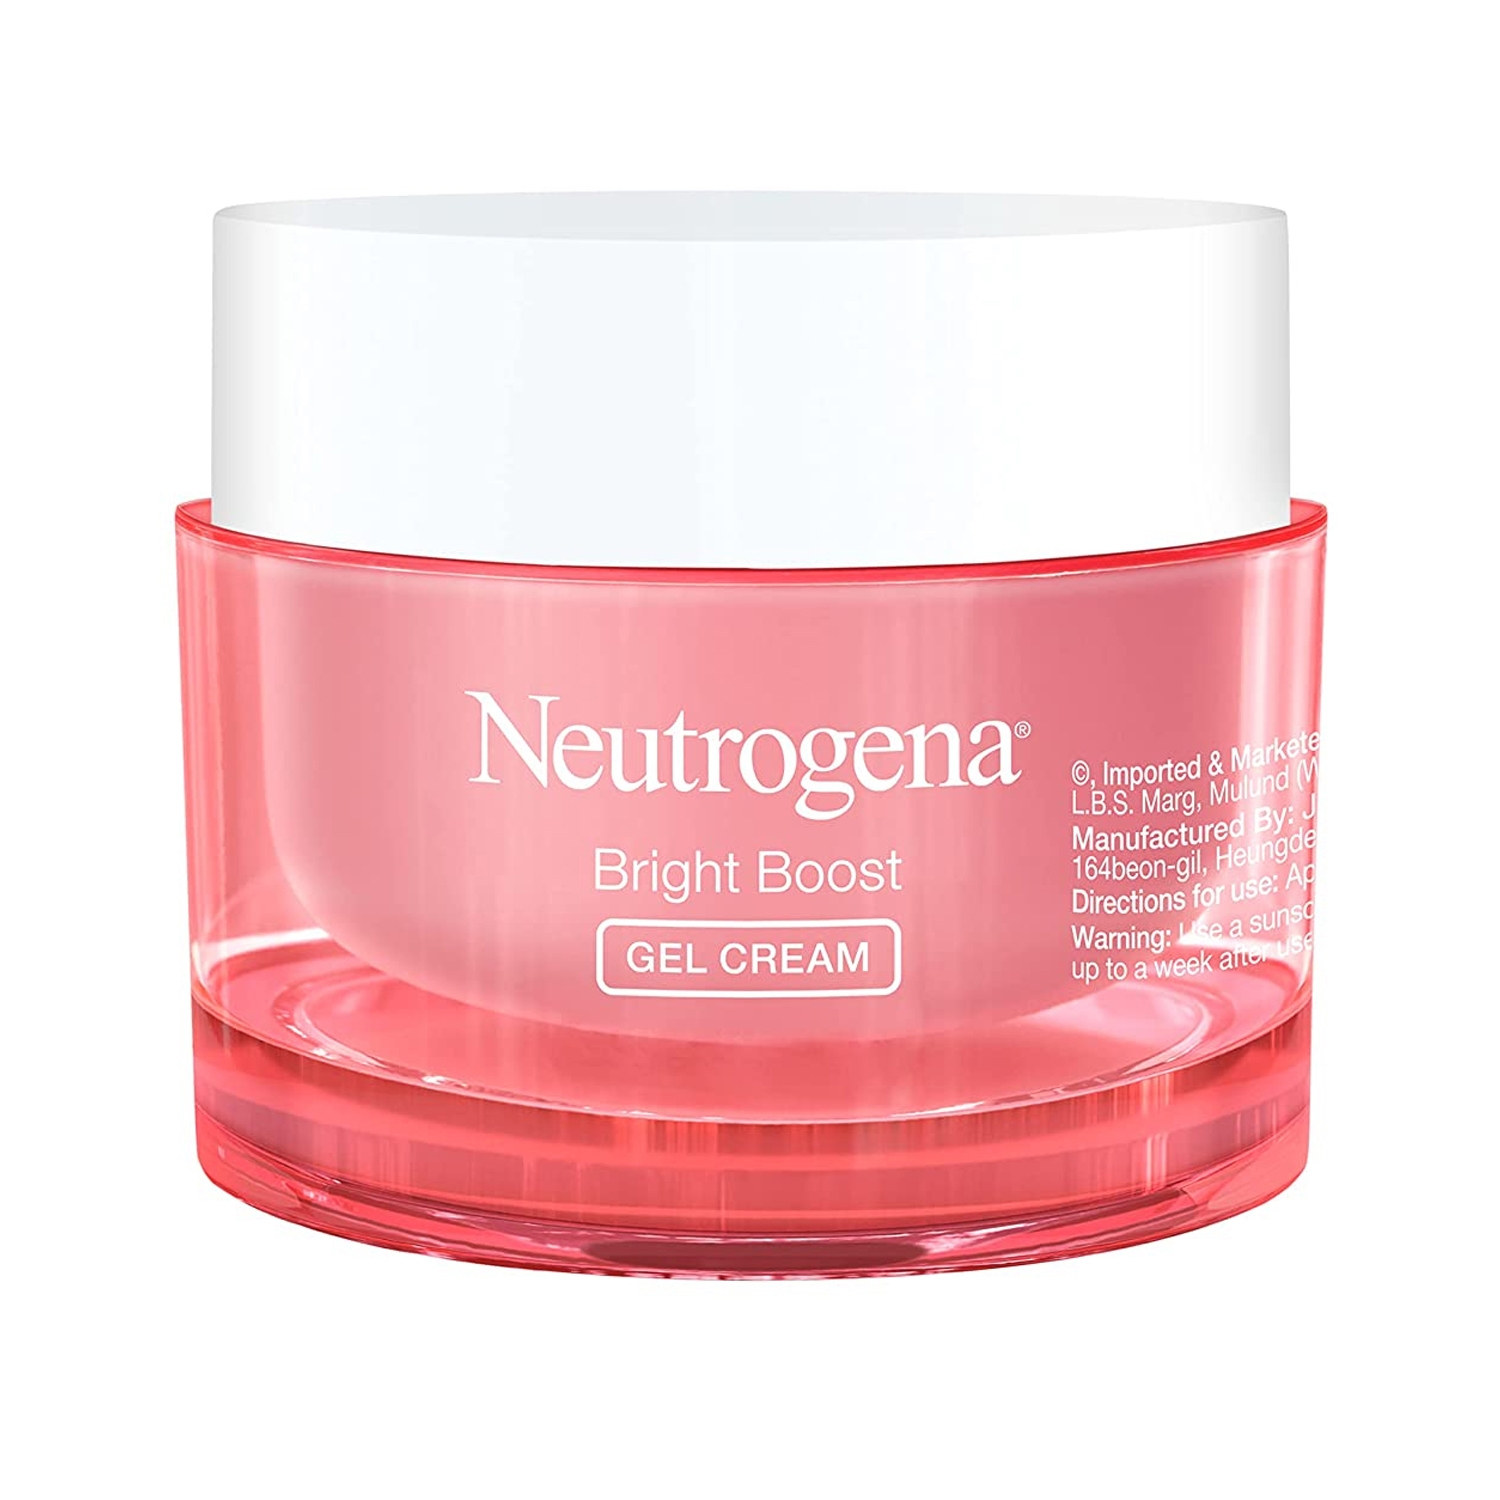 Neutrogena | Neutrogena Bright Boost Gel Cream Face Moisturizer (15g)